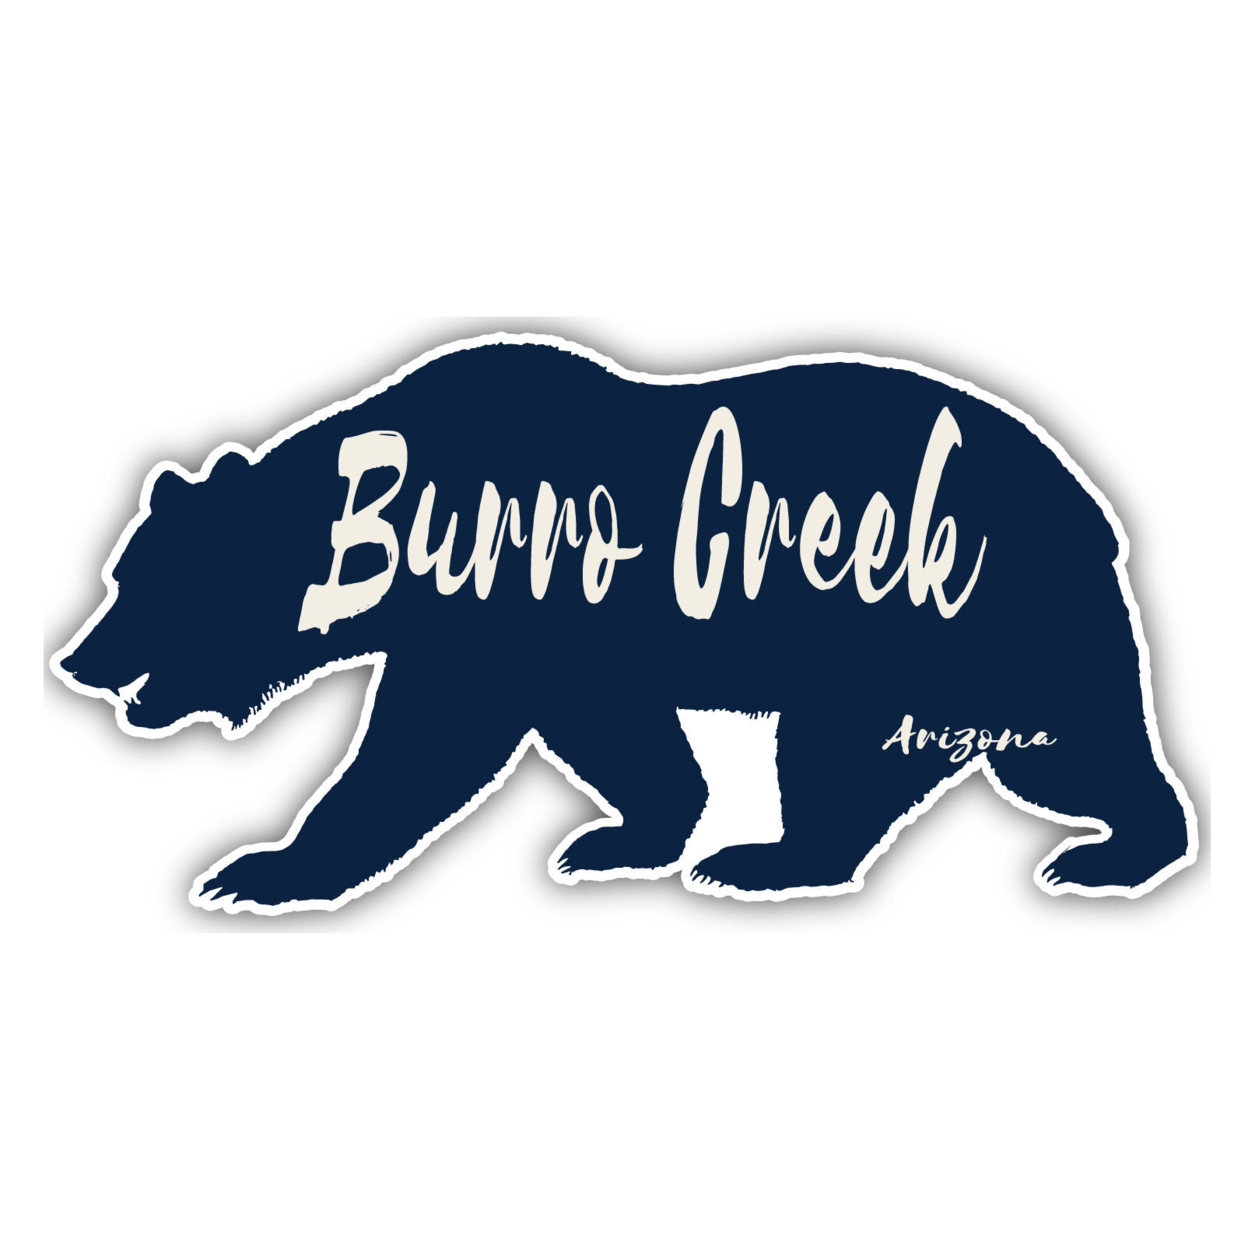 Burro Creek Arizona Souvenir Decorative Stickers (Choose Theme And Size) - Single Unit, 12-Inch, Bear